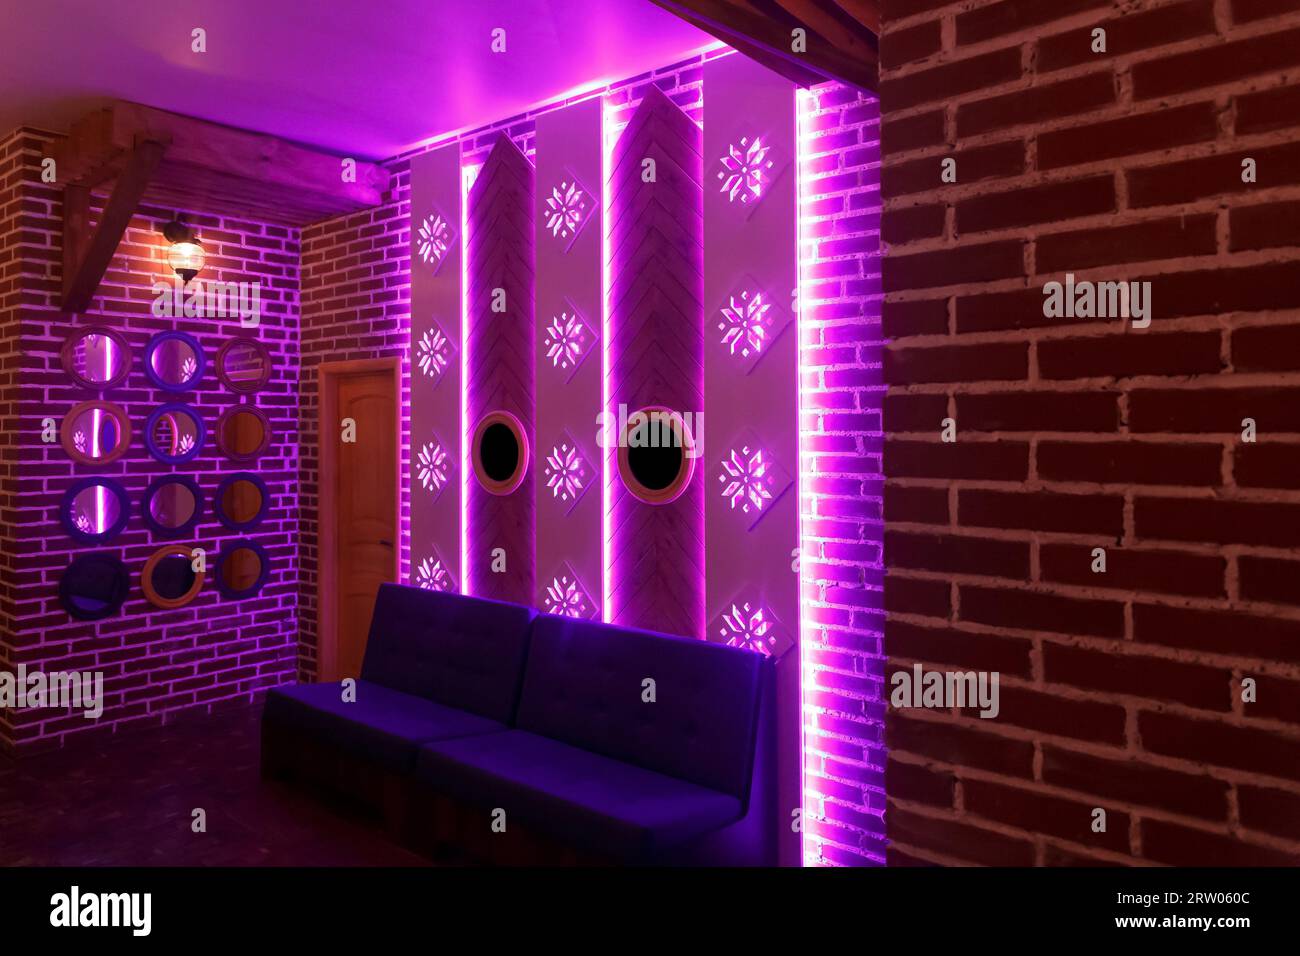 Decorative interior design element with brick walls, mirrors, sofa and neon pink light. Stock Photo